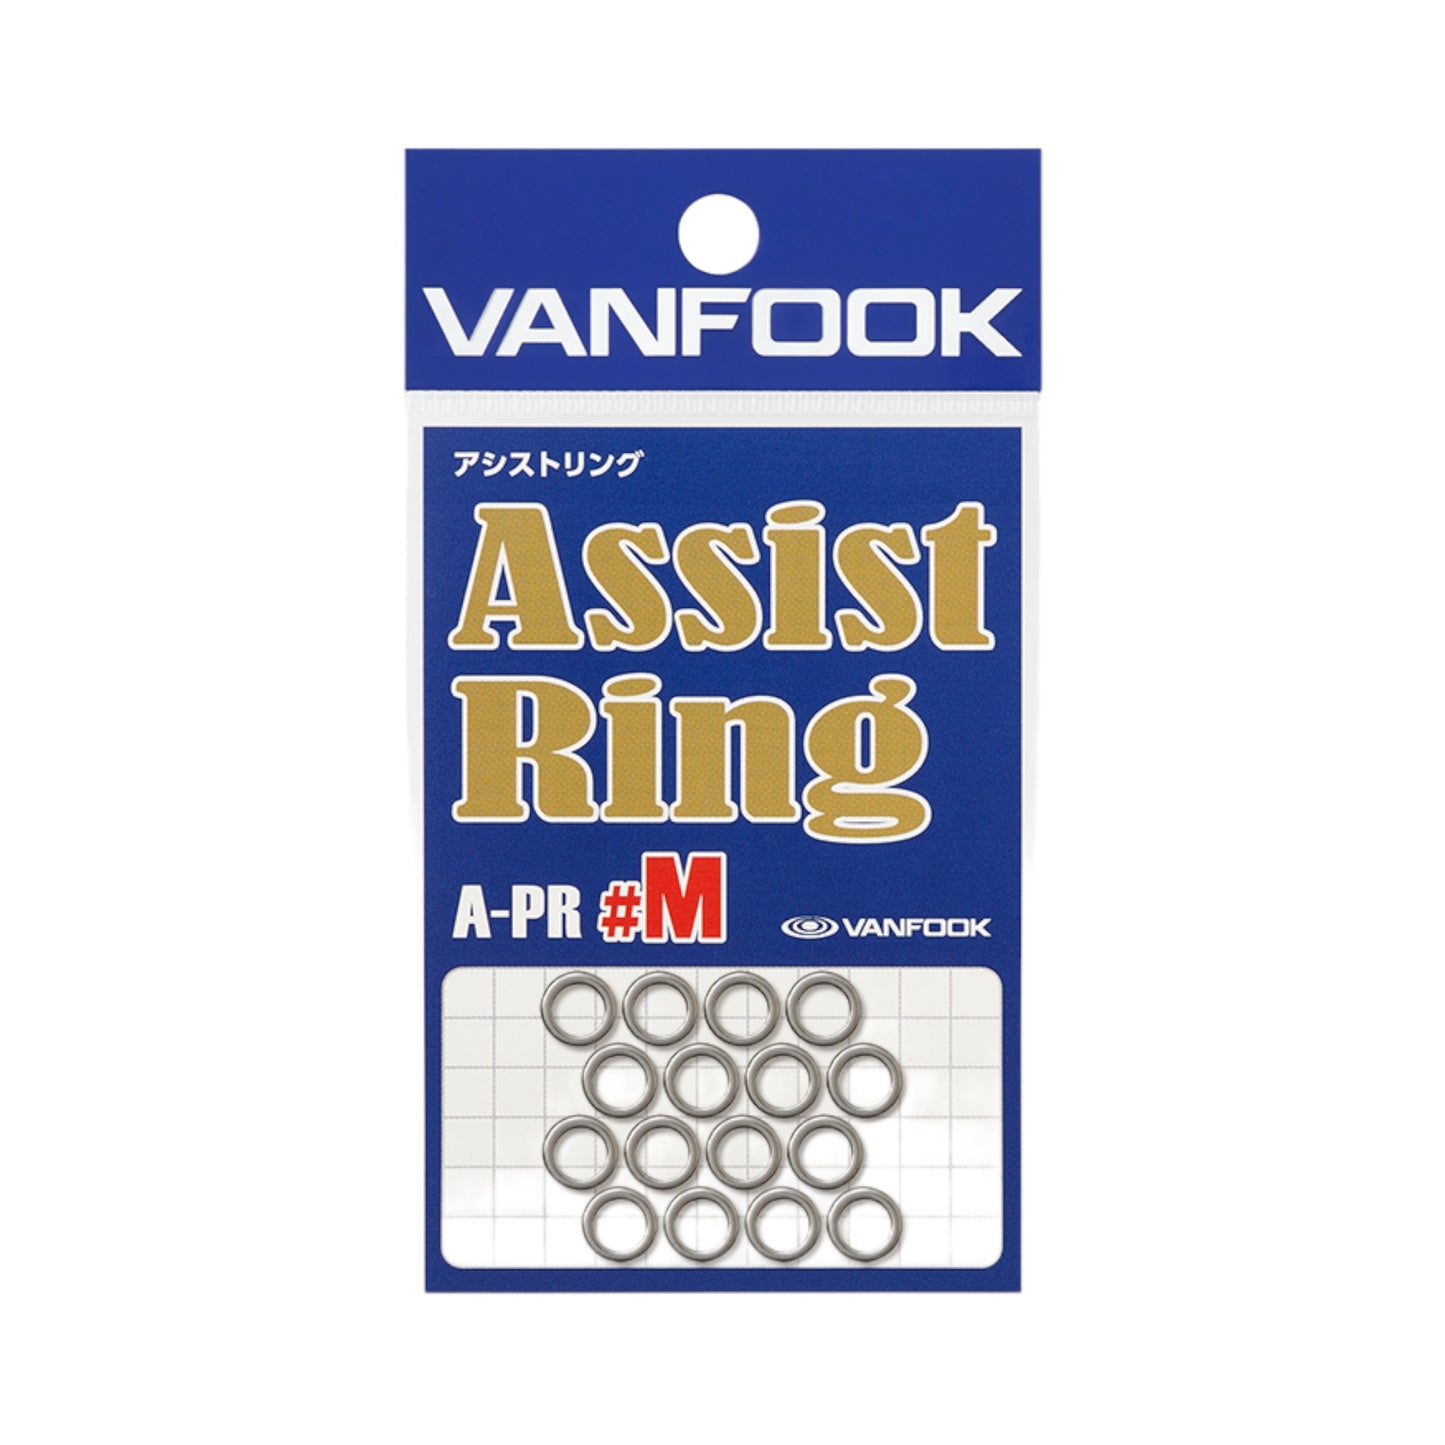 Vanfook A-PR SOLID RING